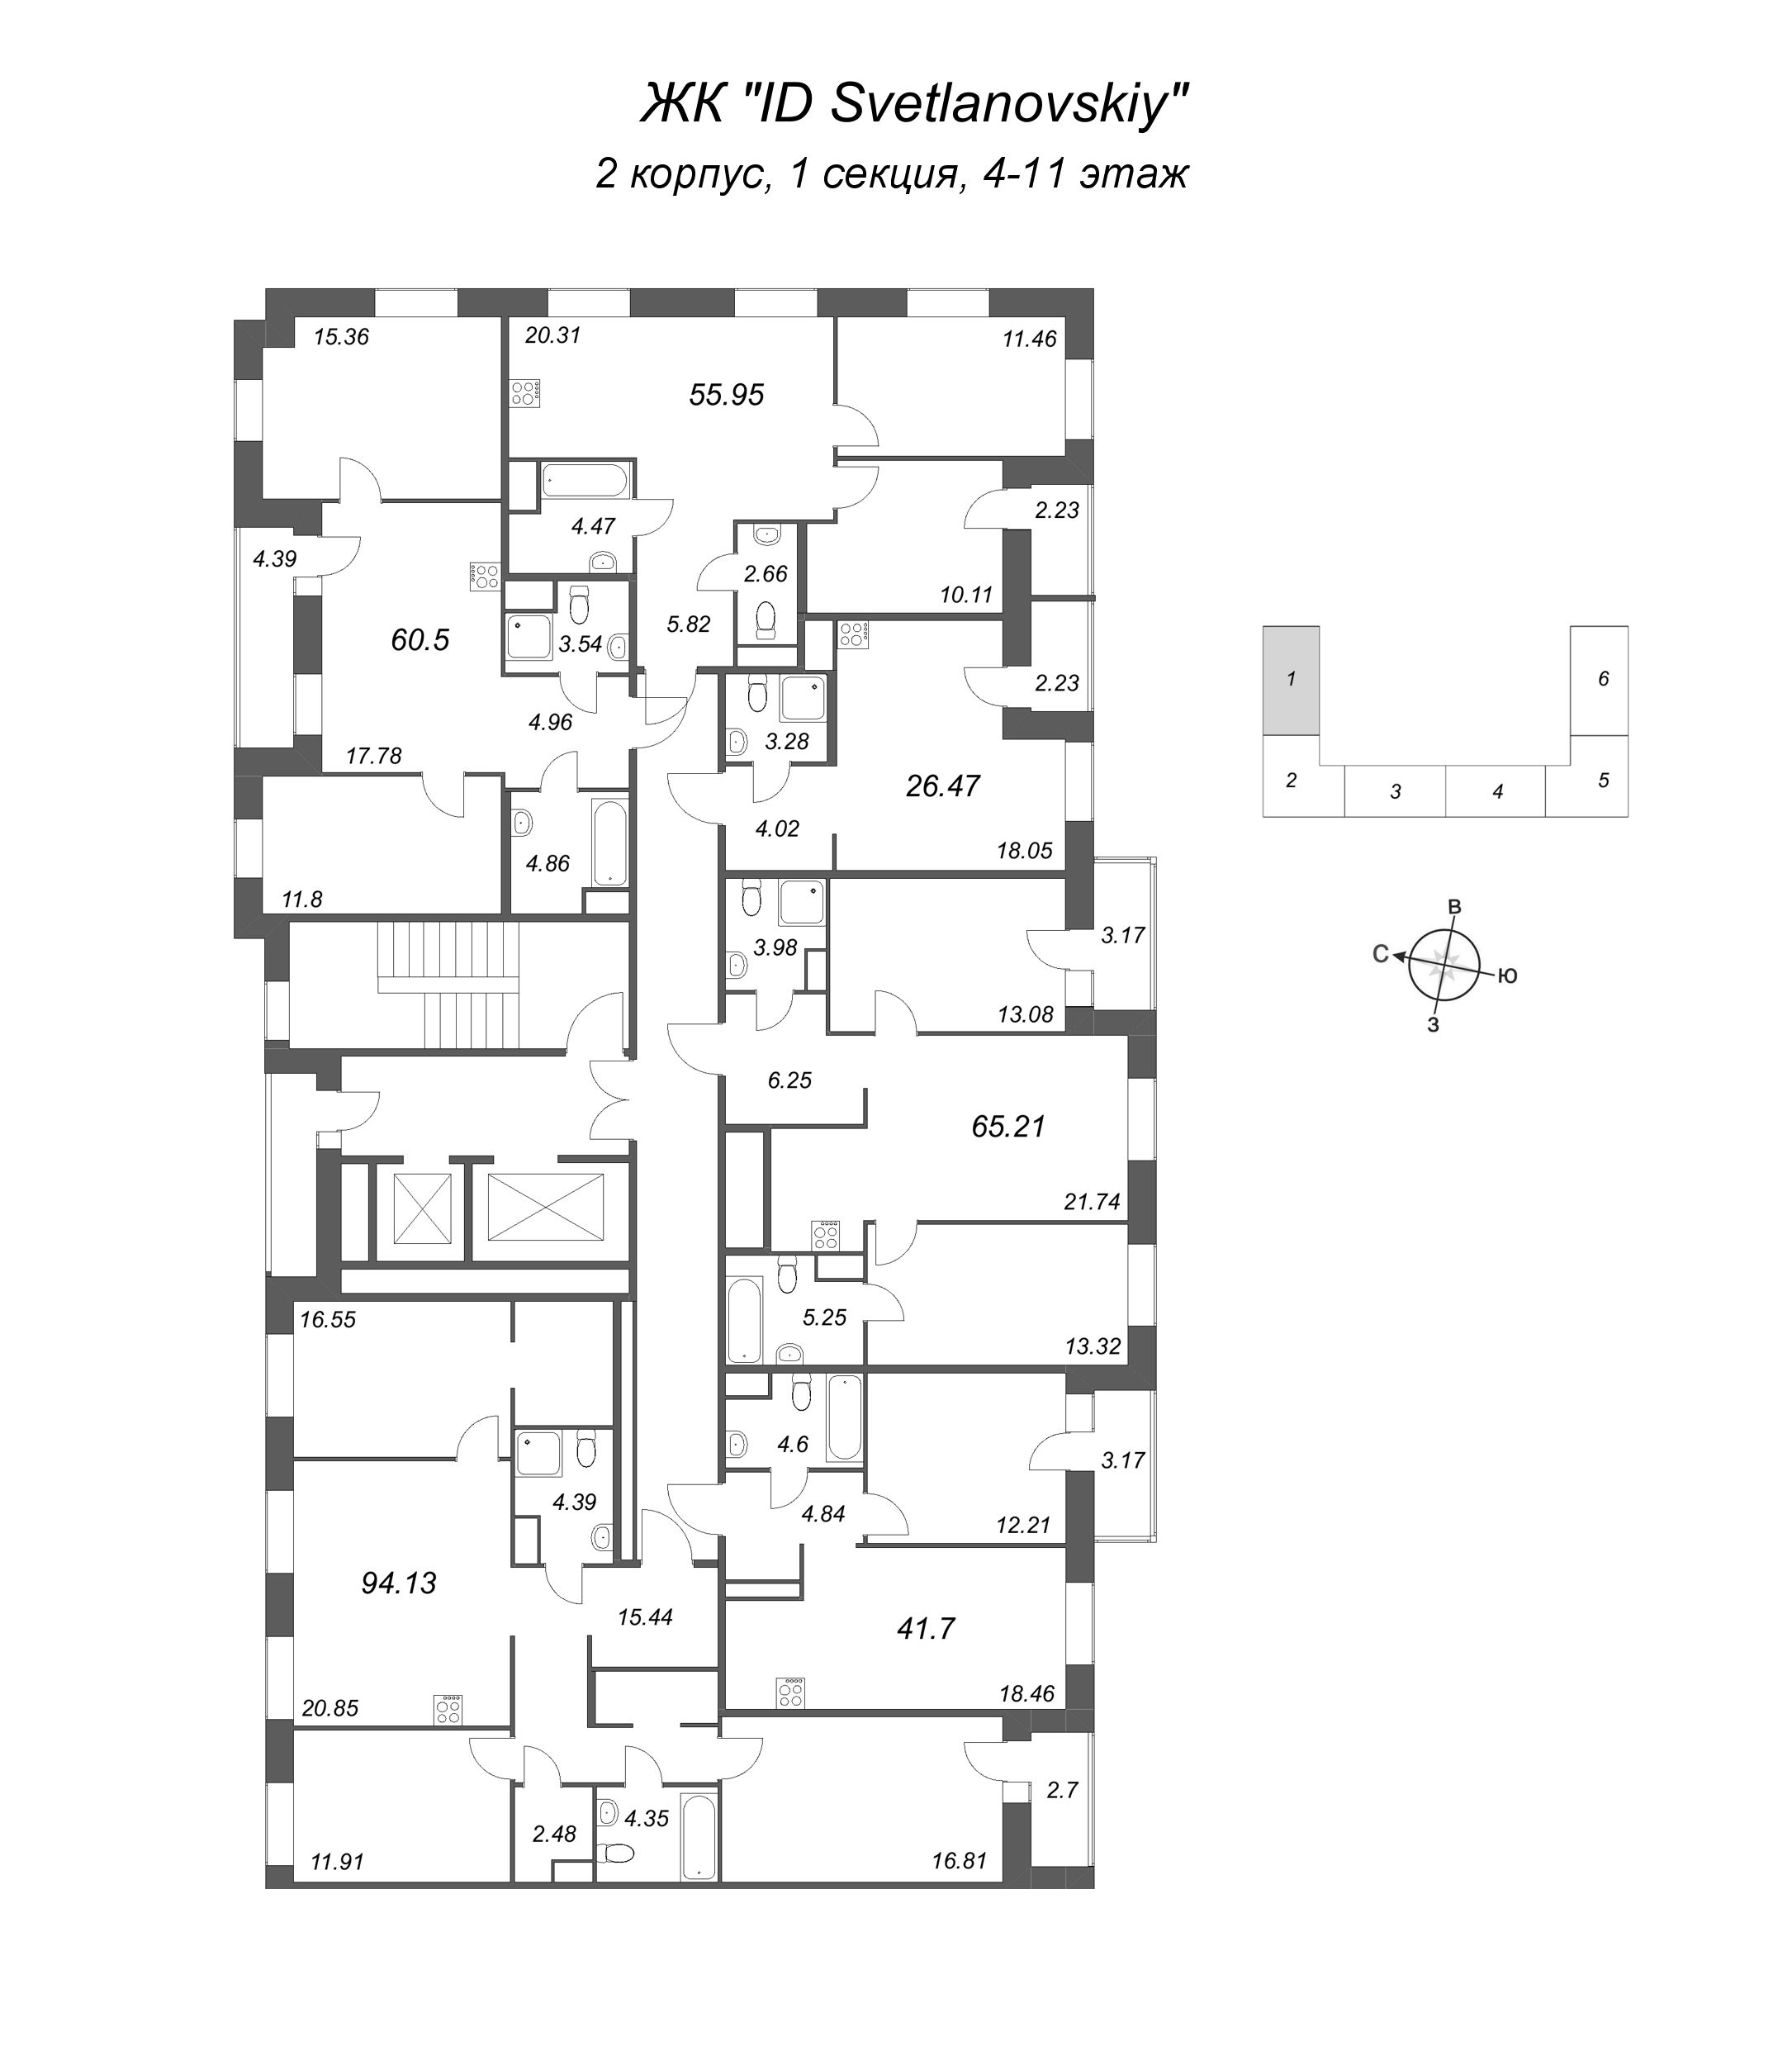 4-комнатная (Евро) квартира, 94.13 м² - планировка этажа